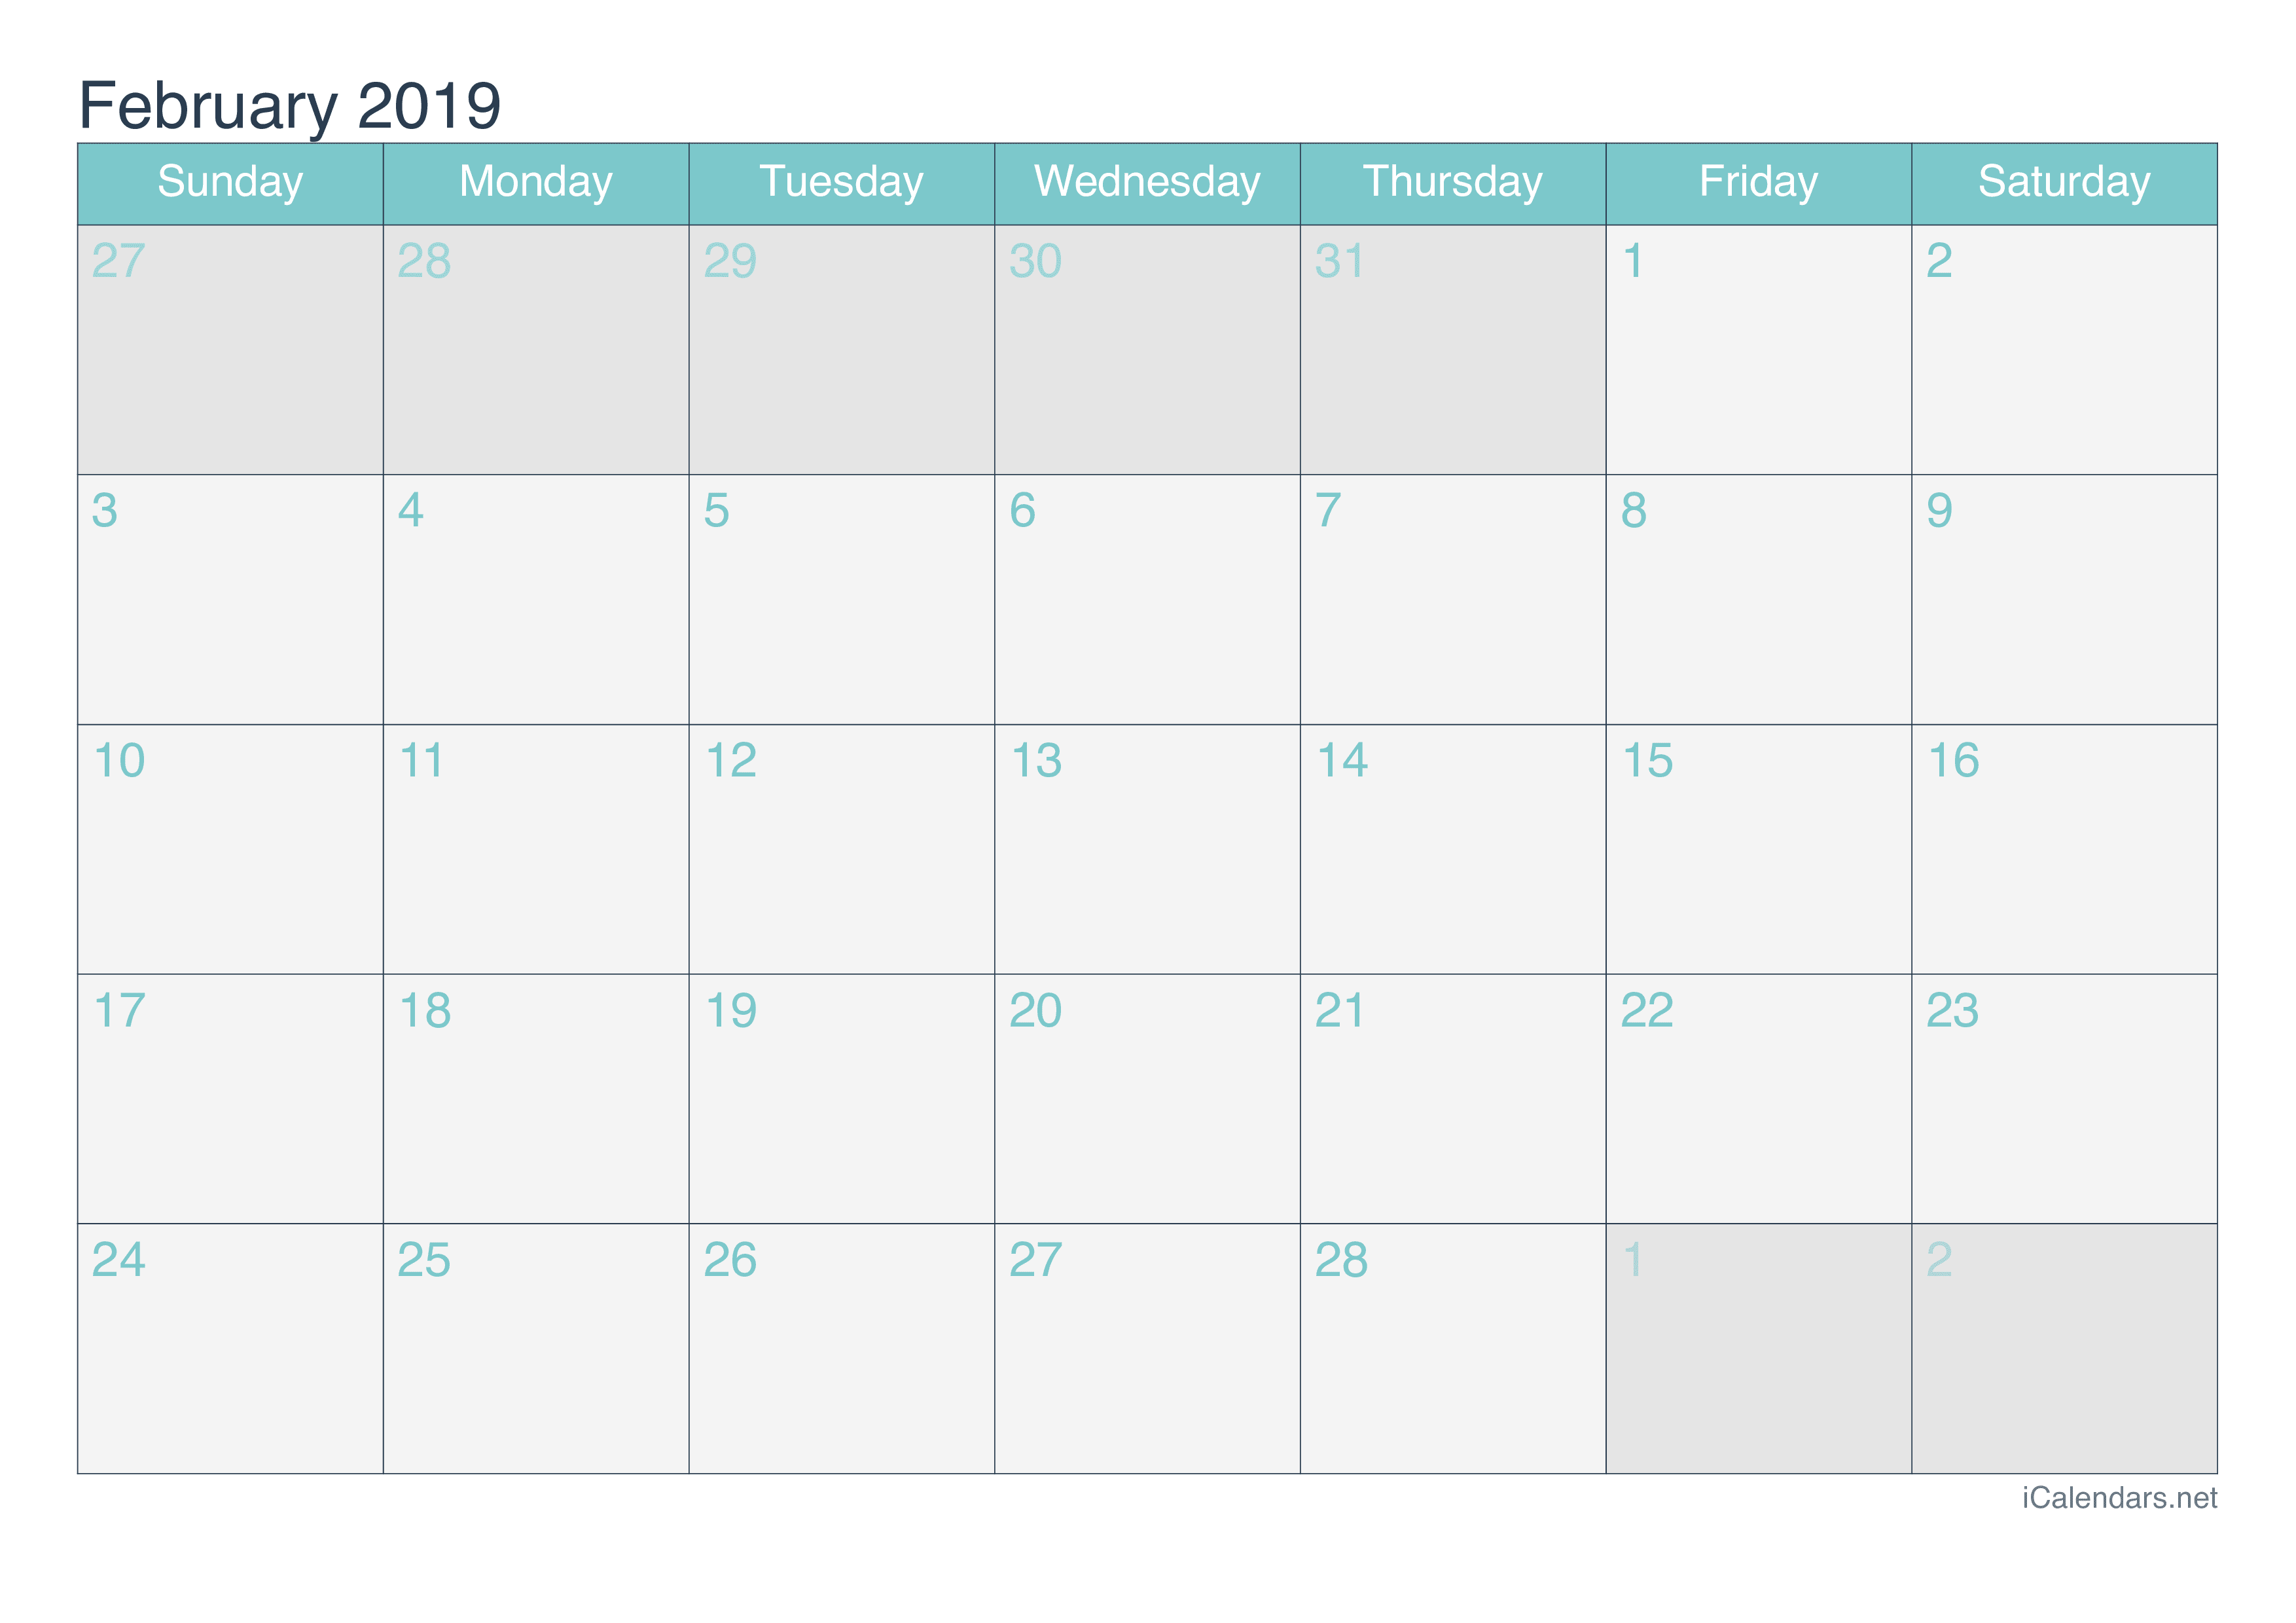 february-2019-calendar-with-holidays-2019-calendar-calendar-holiday